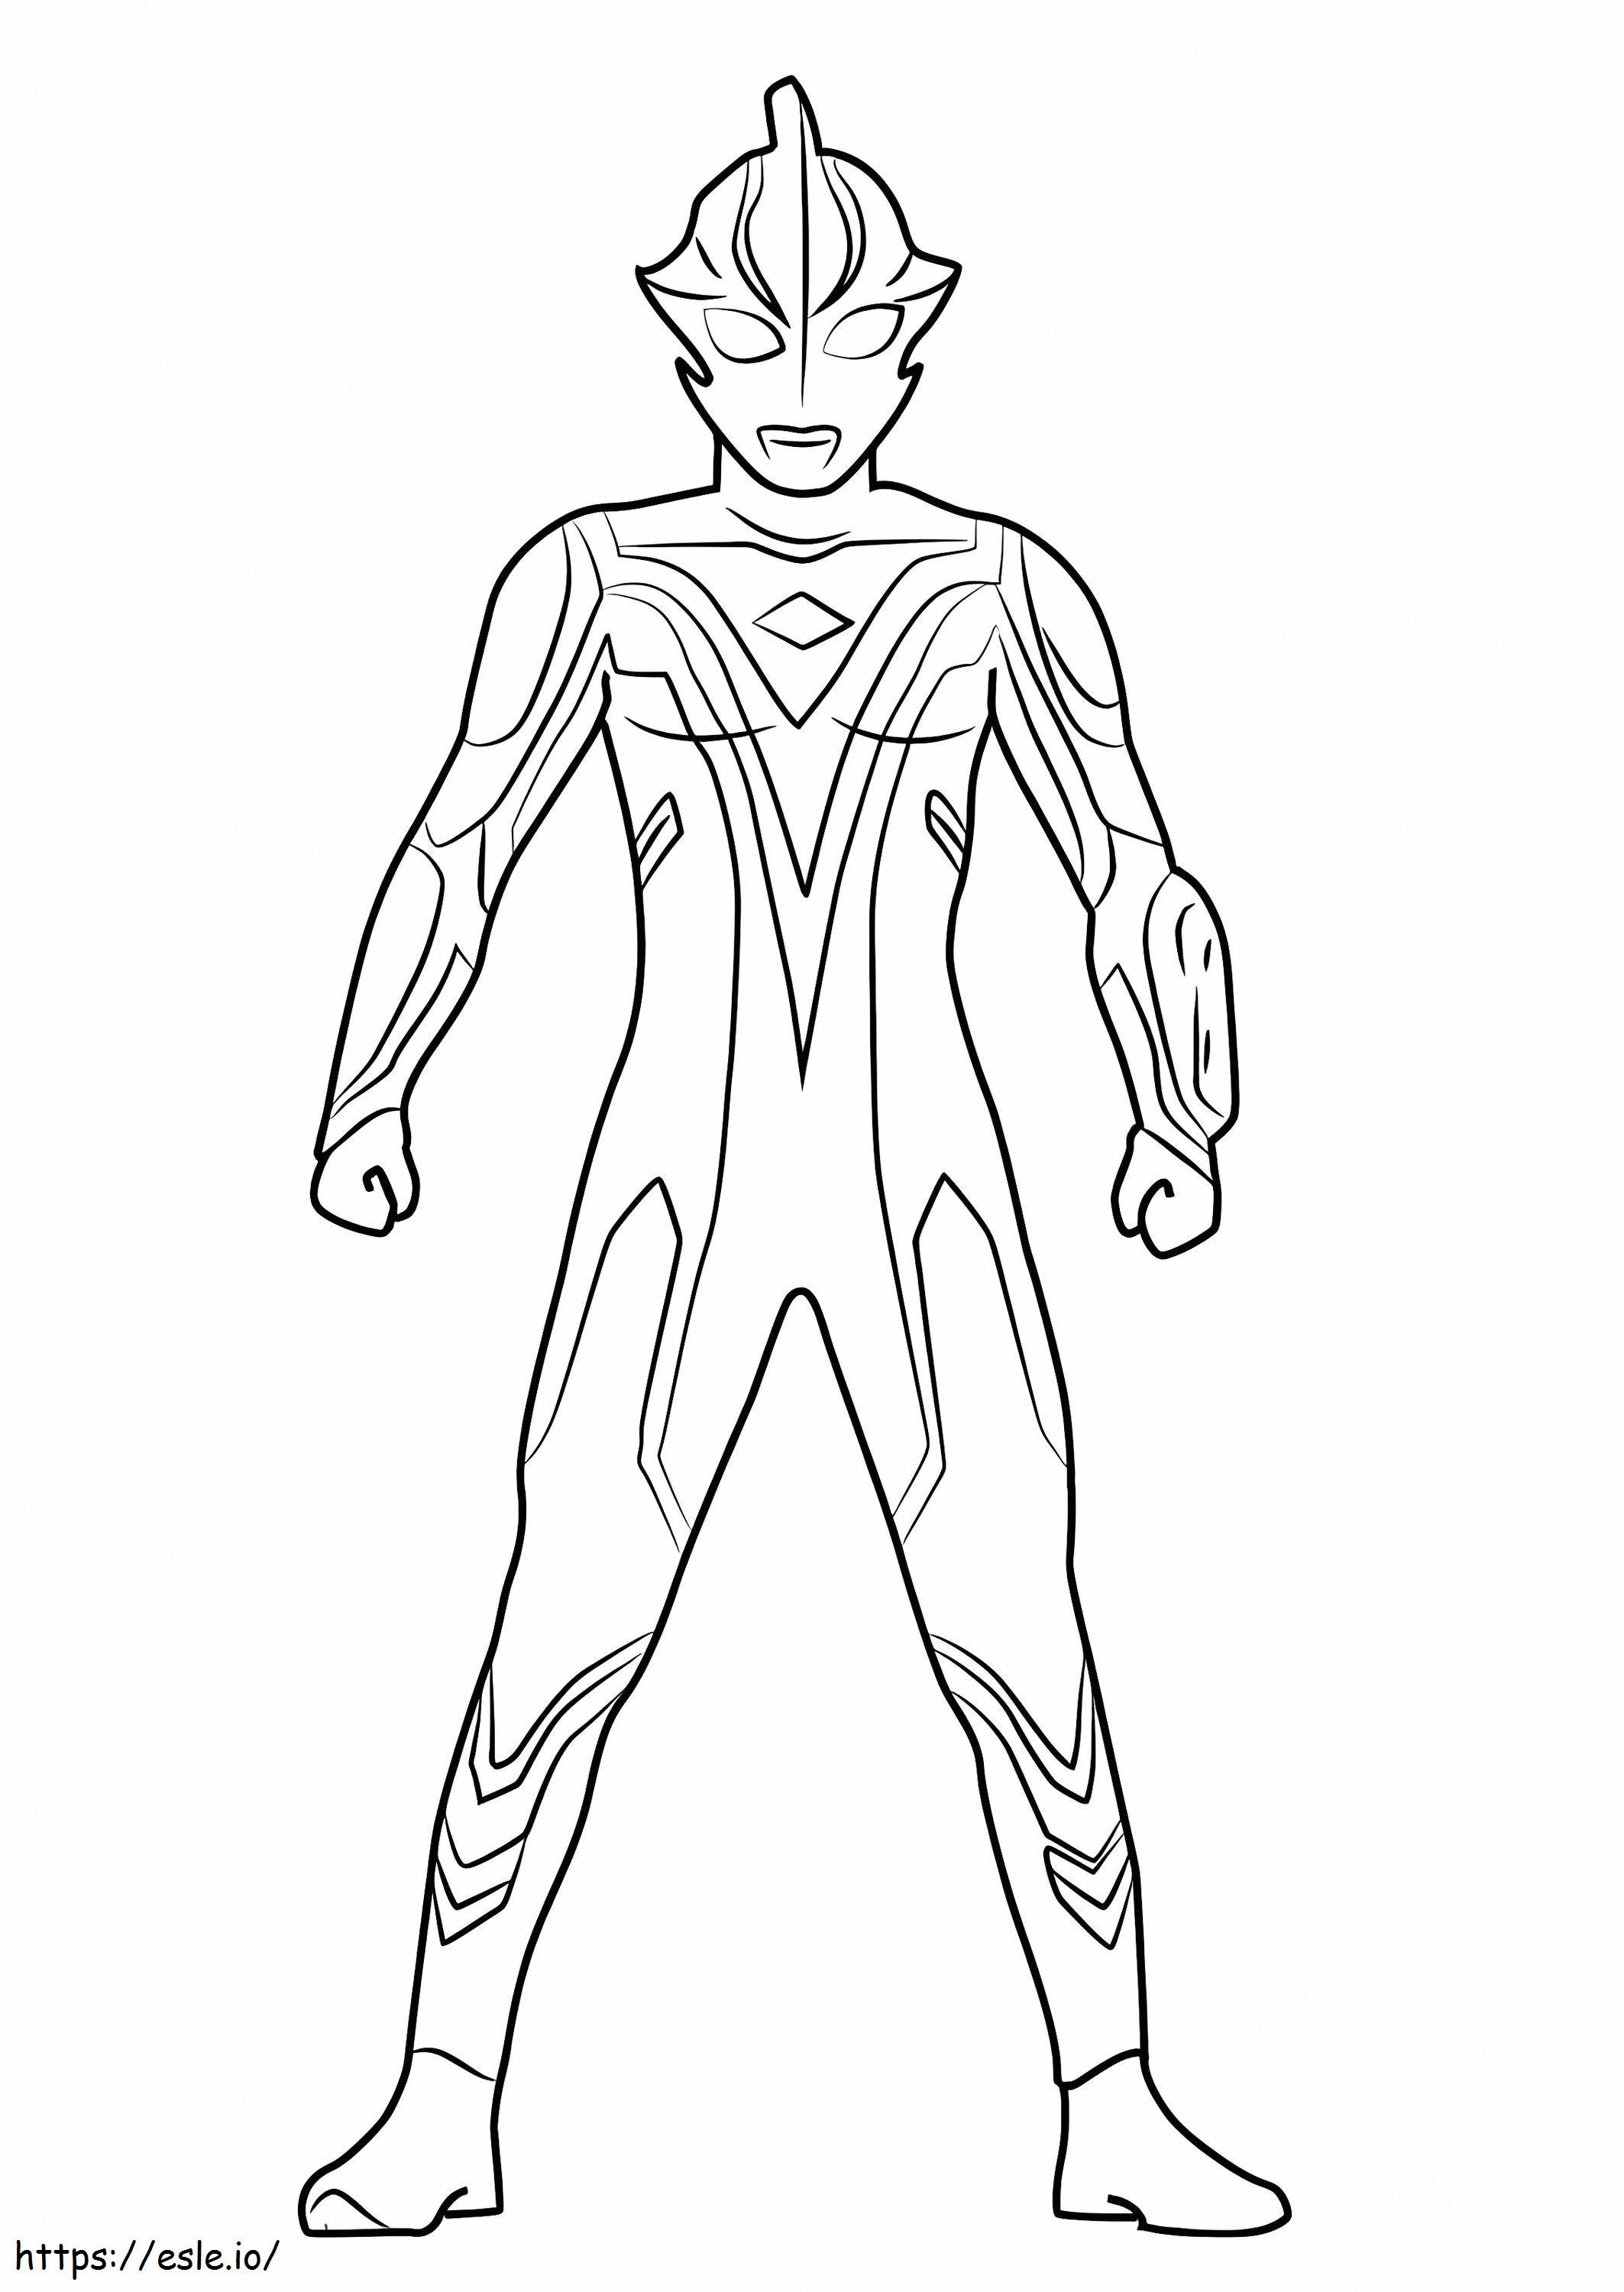 Ultraman Mebius coloring page